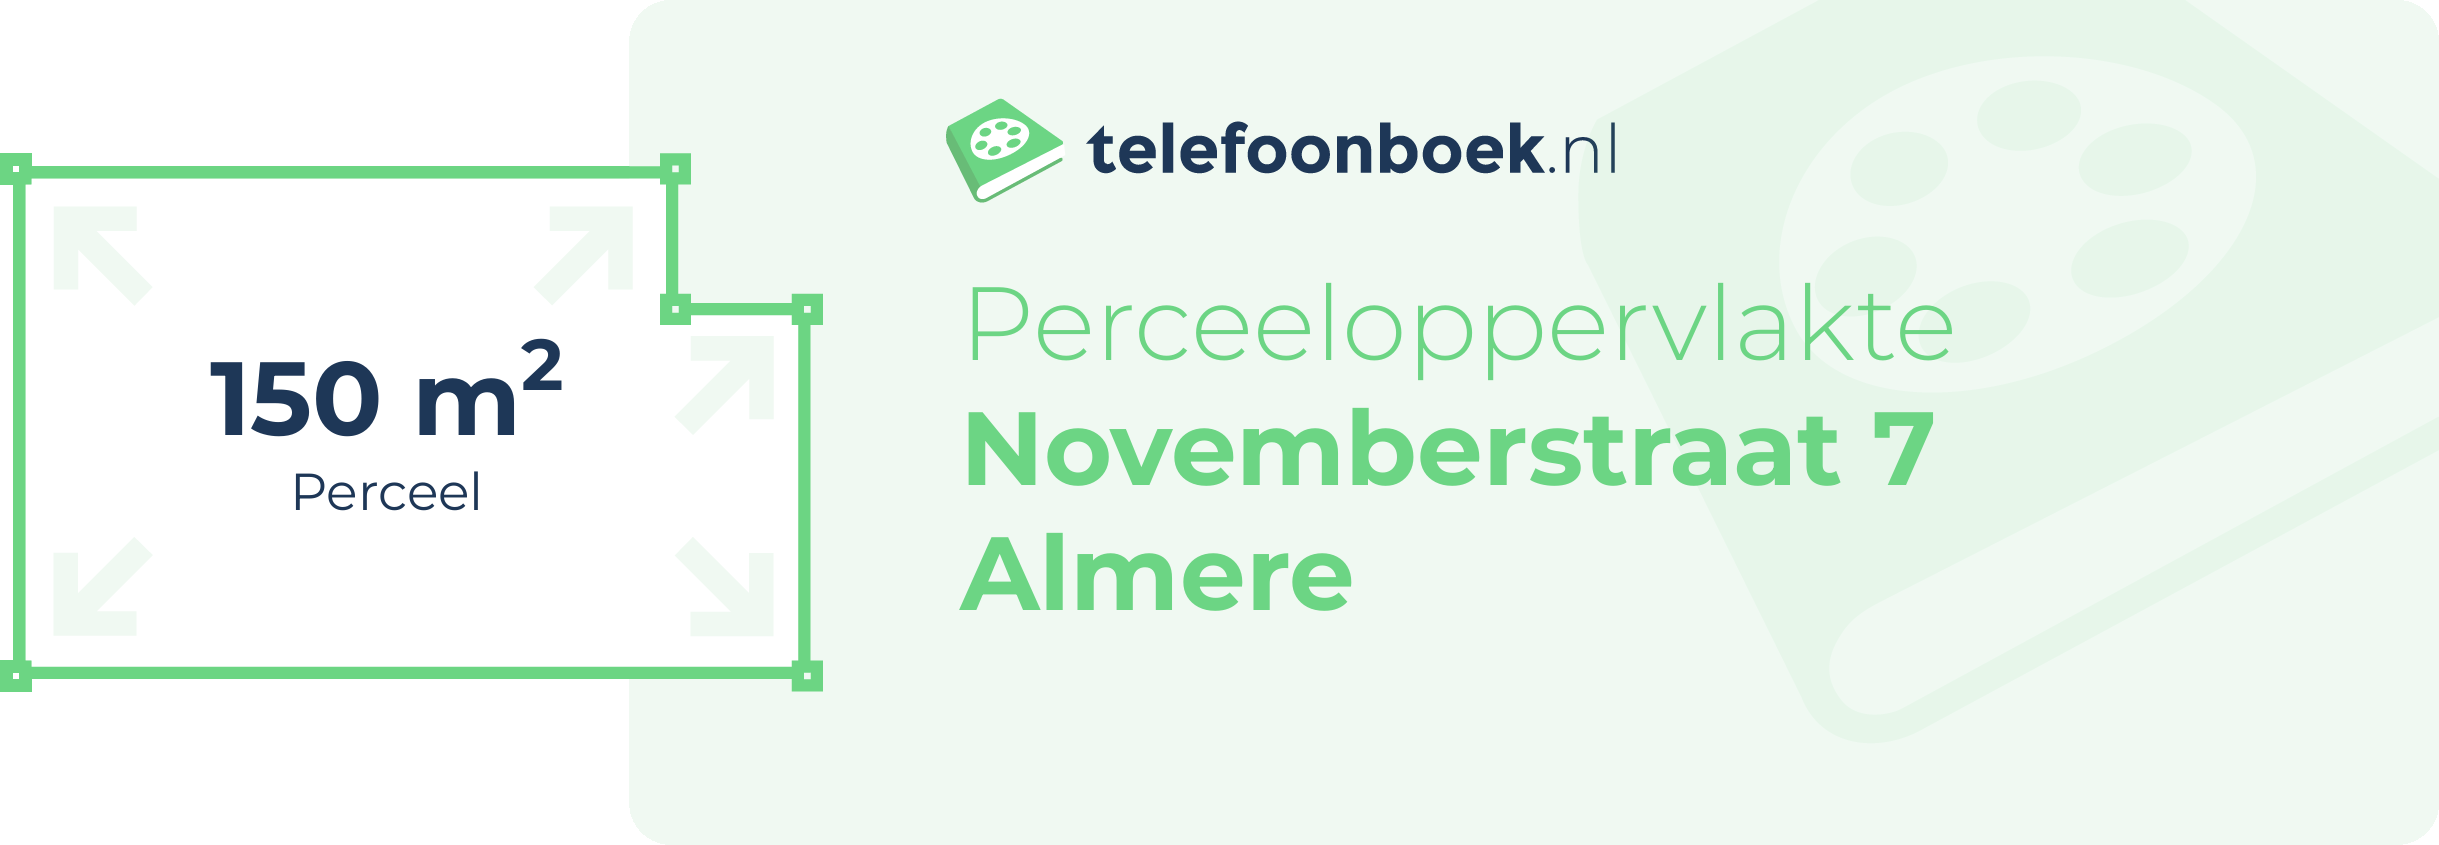 Perceeloppervlakte Novemberstraat 7 Almere